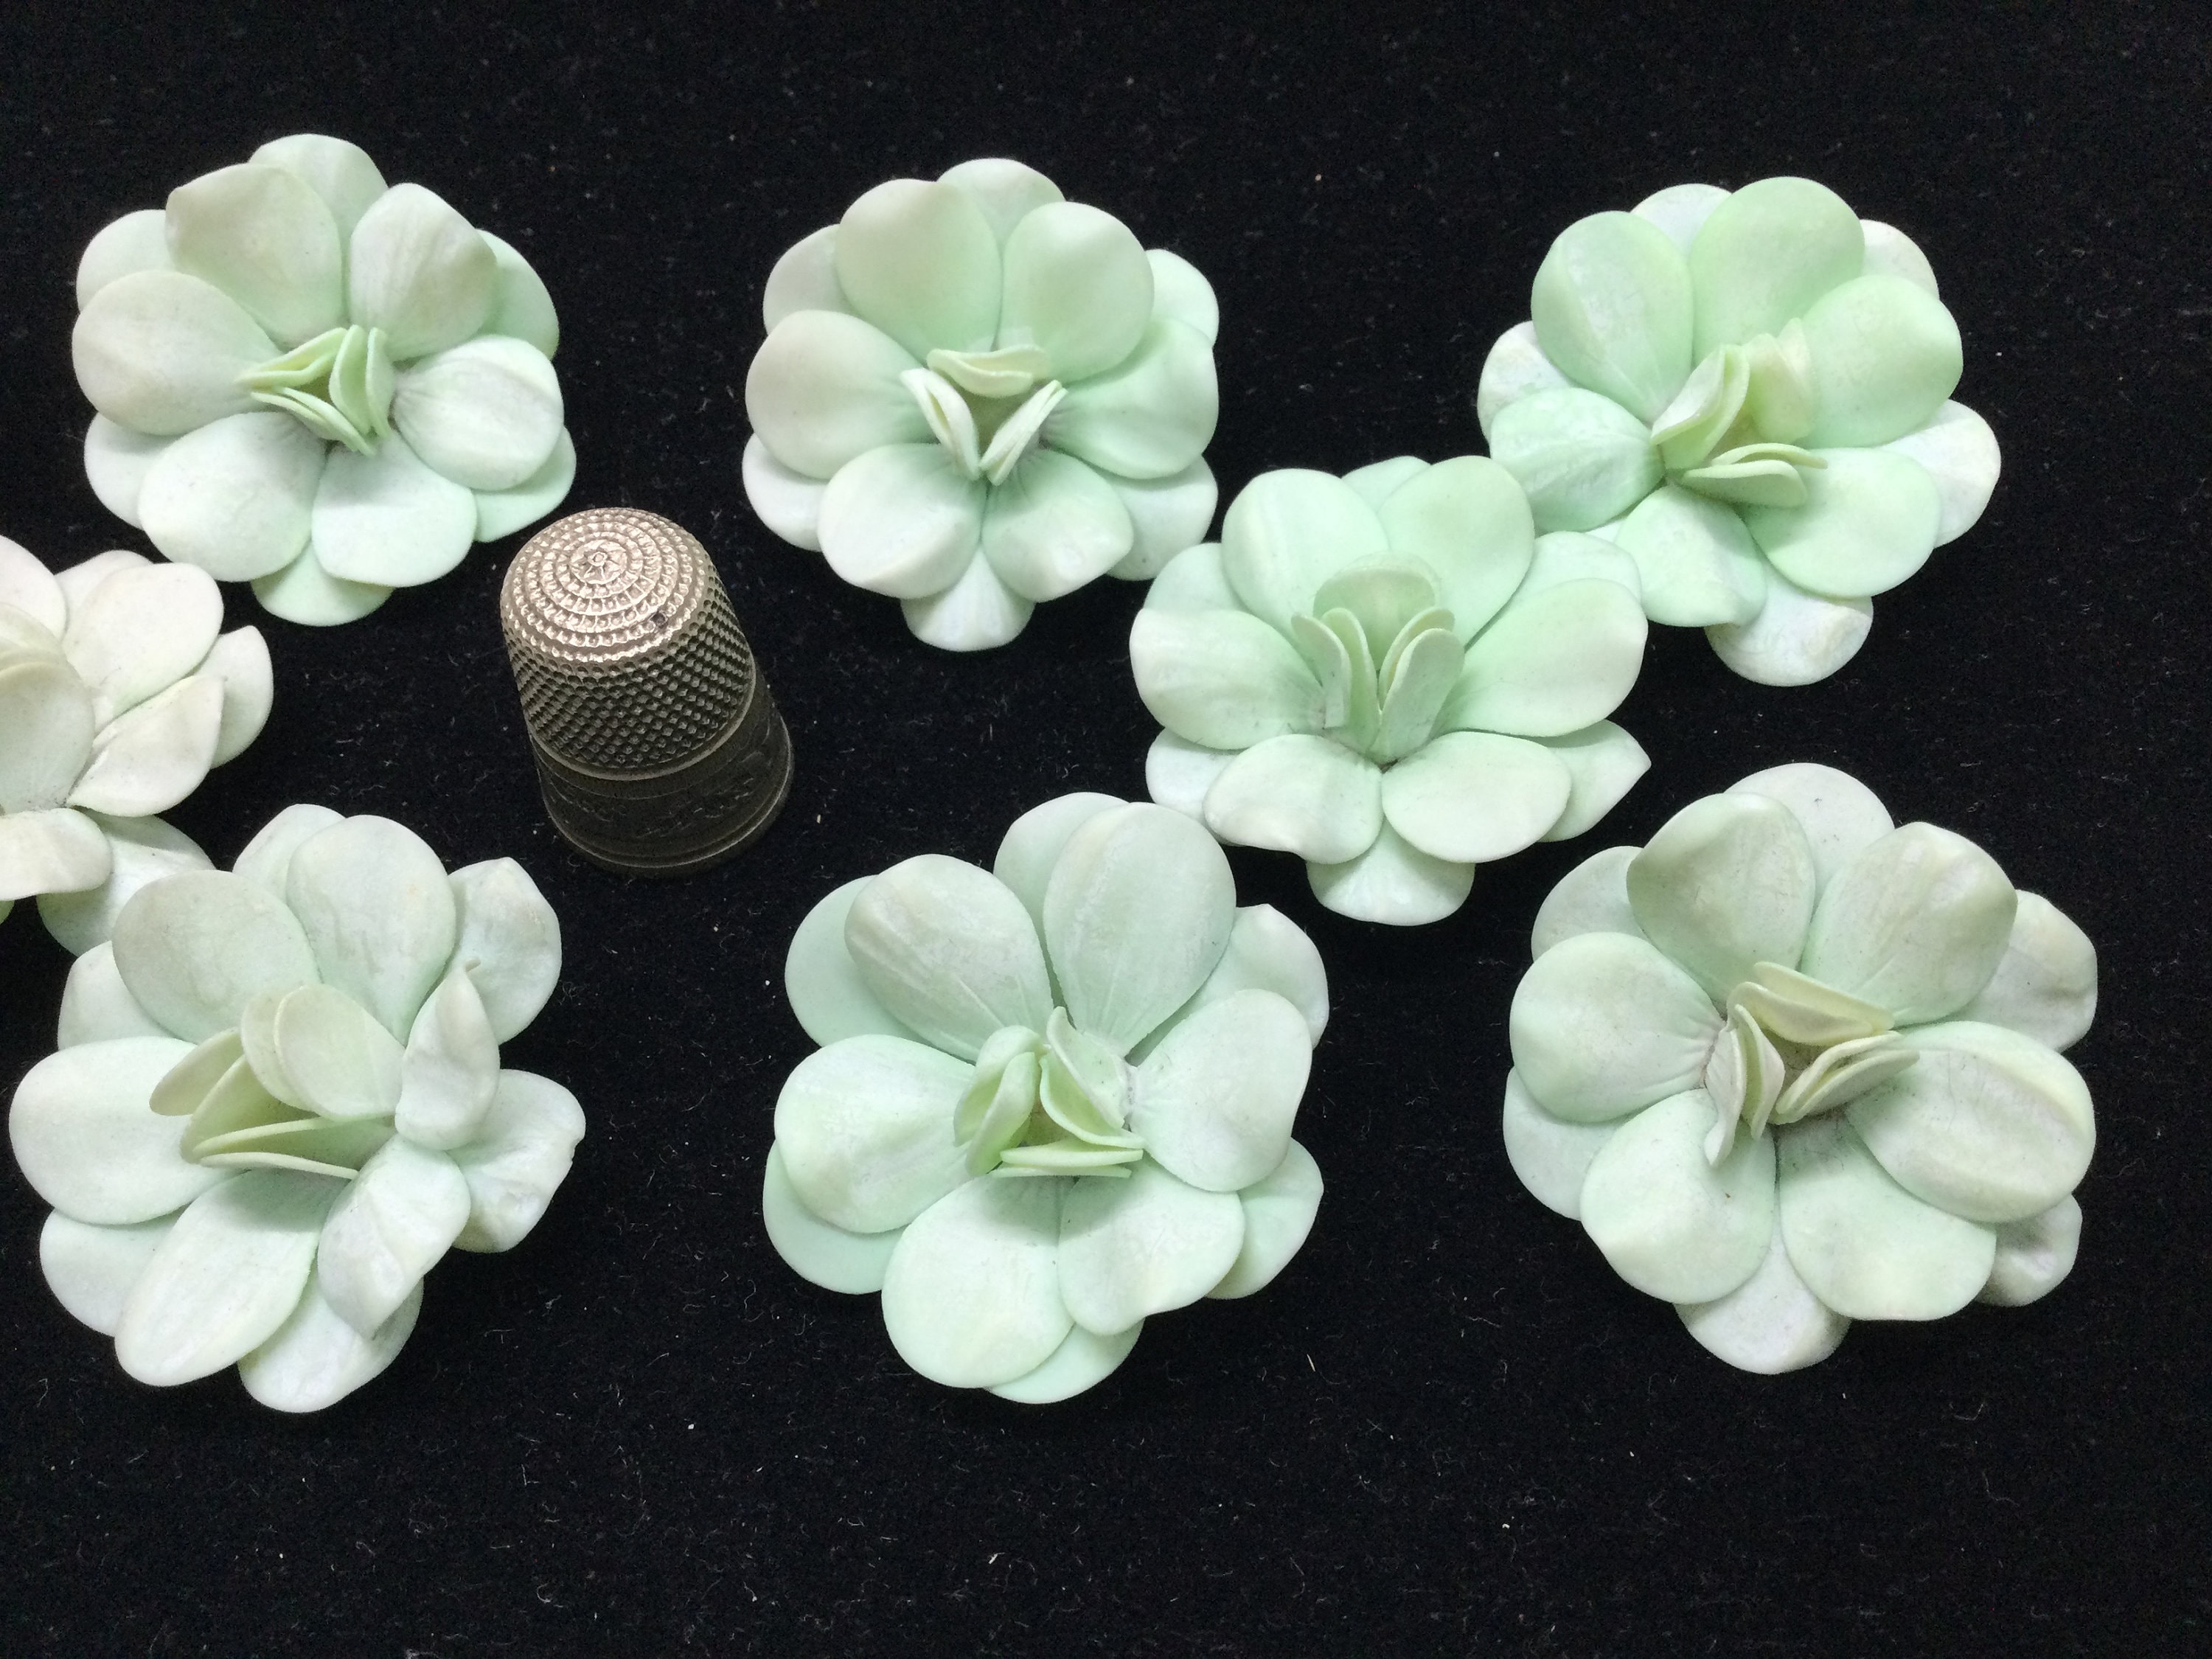 10 Fleurs Anciennes earrings. En Celluloïd vert clair Bijoux 10 Vintage fades green Celluloid Flowers 1950